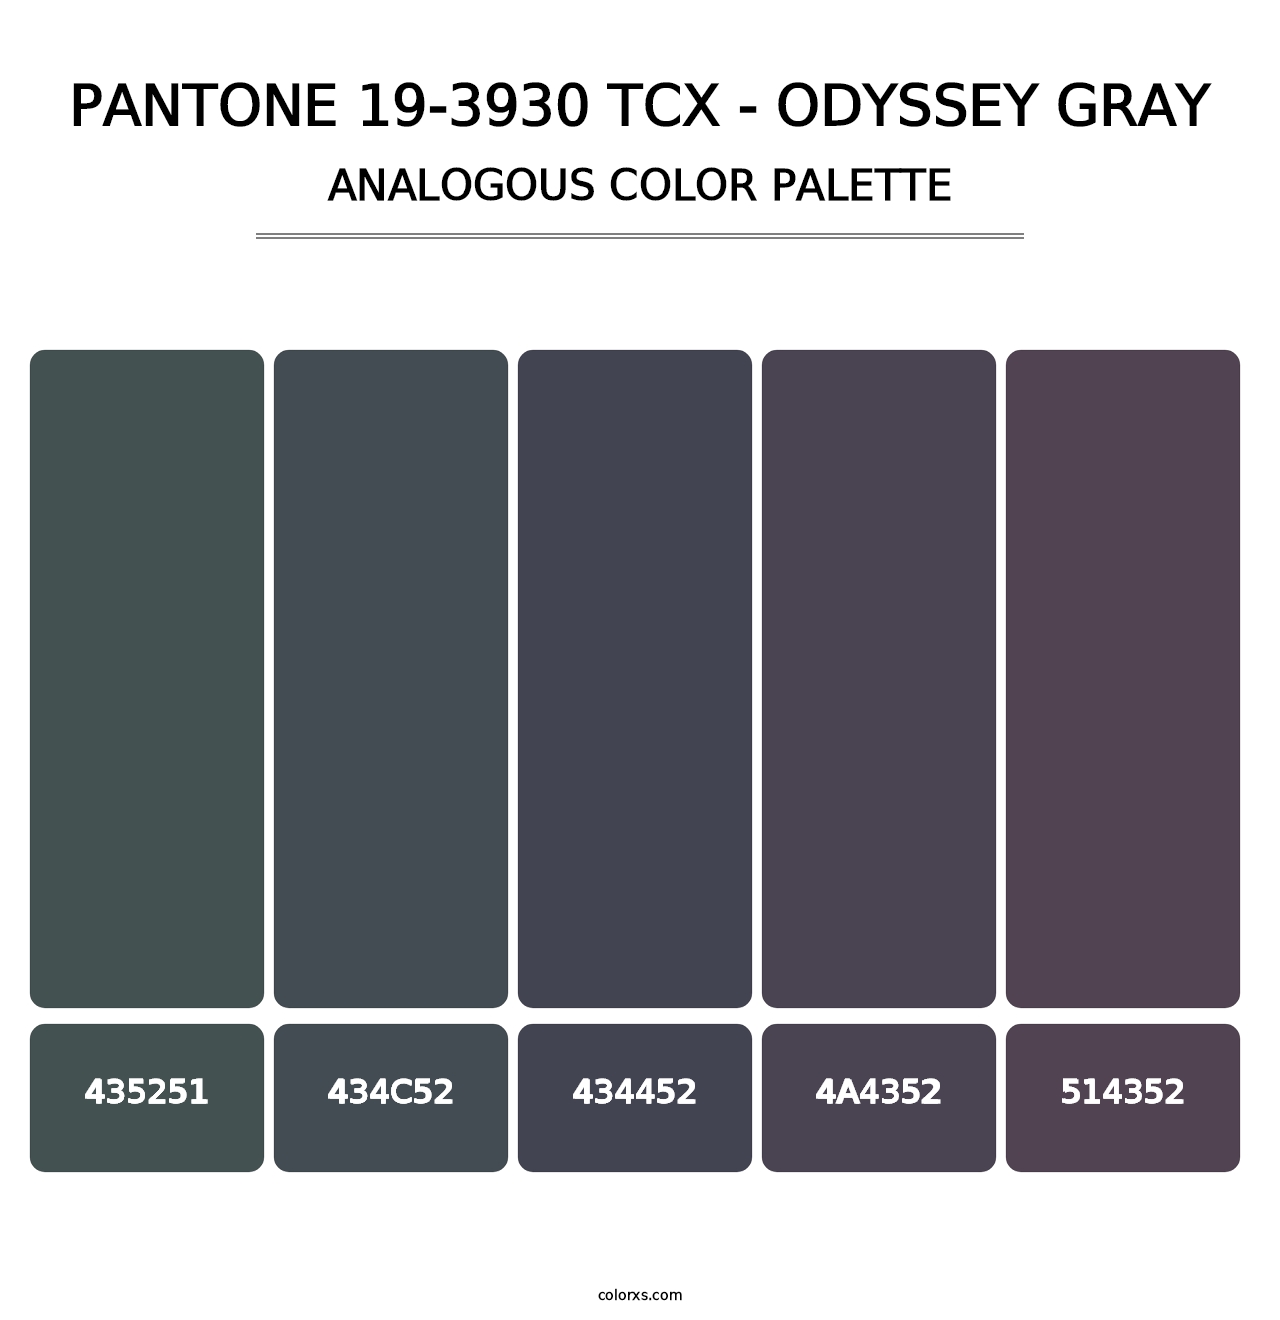 PANTONE 19-3930 TCX - Odyssey Gray - Analogous Color Palette